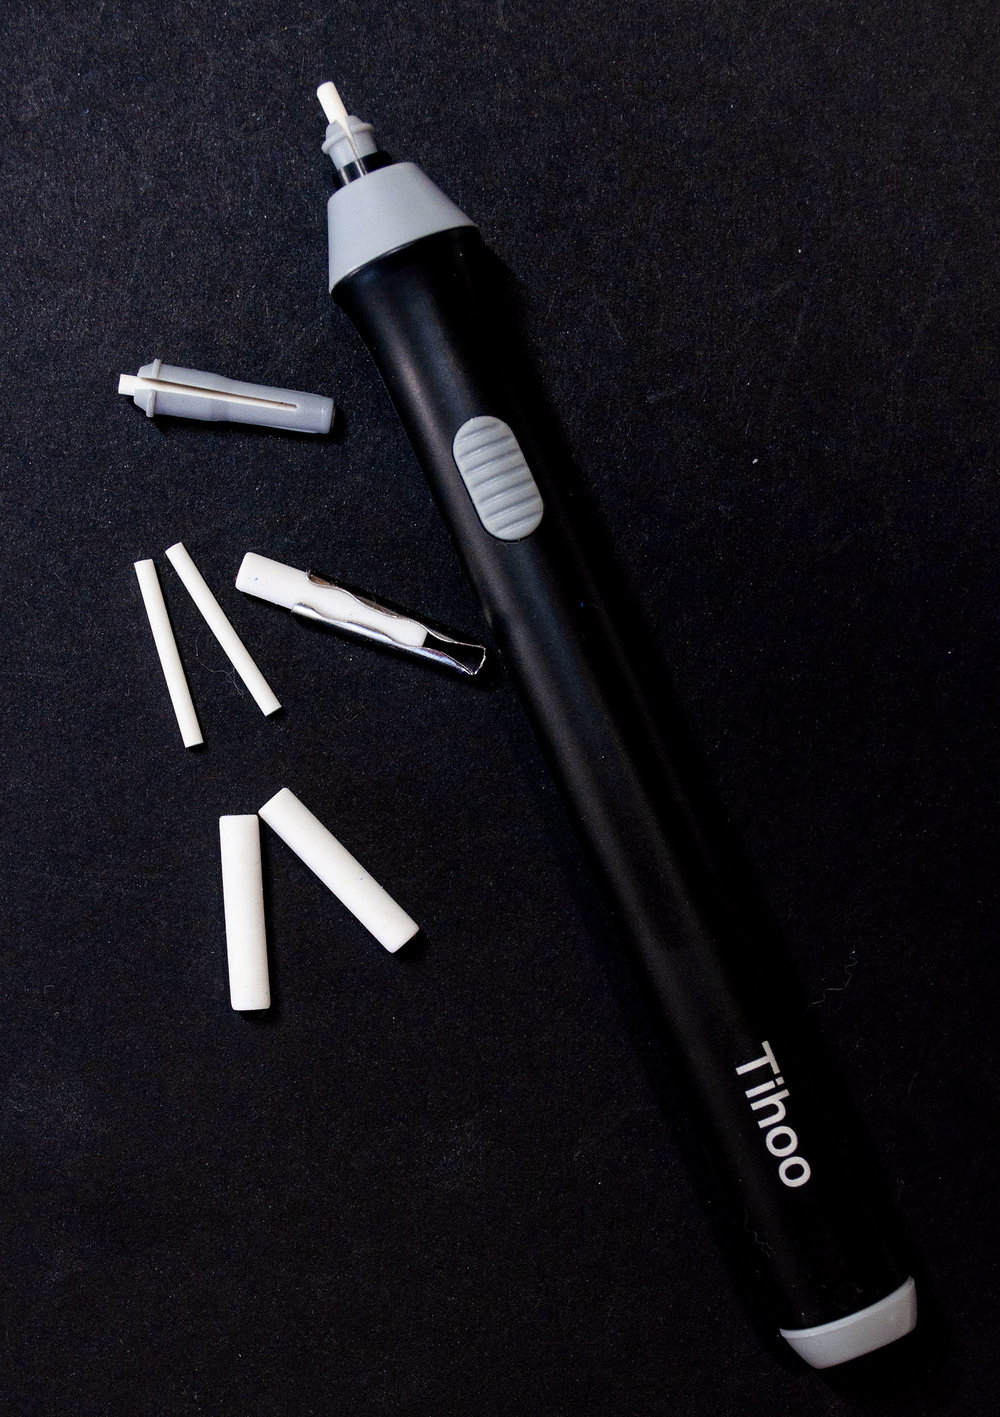 Thinest Battery Eraser - Tihoo Battery Eraser — The Art Gear Guide